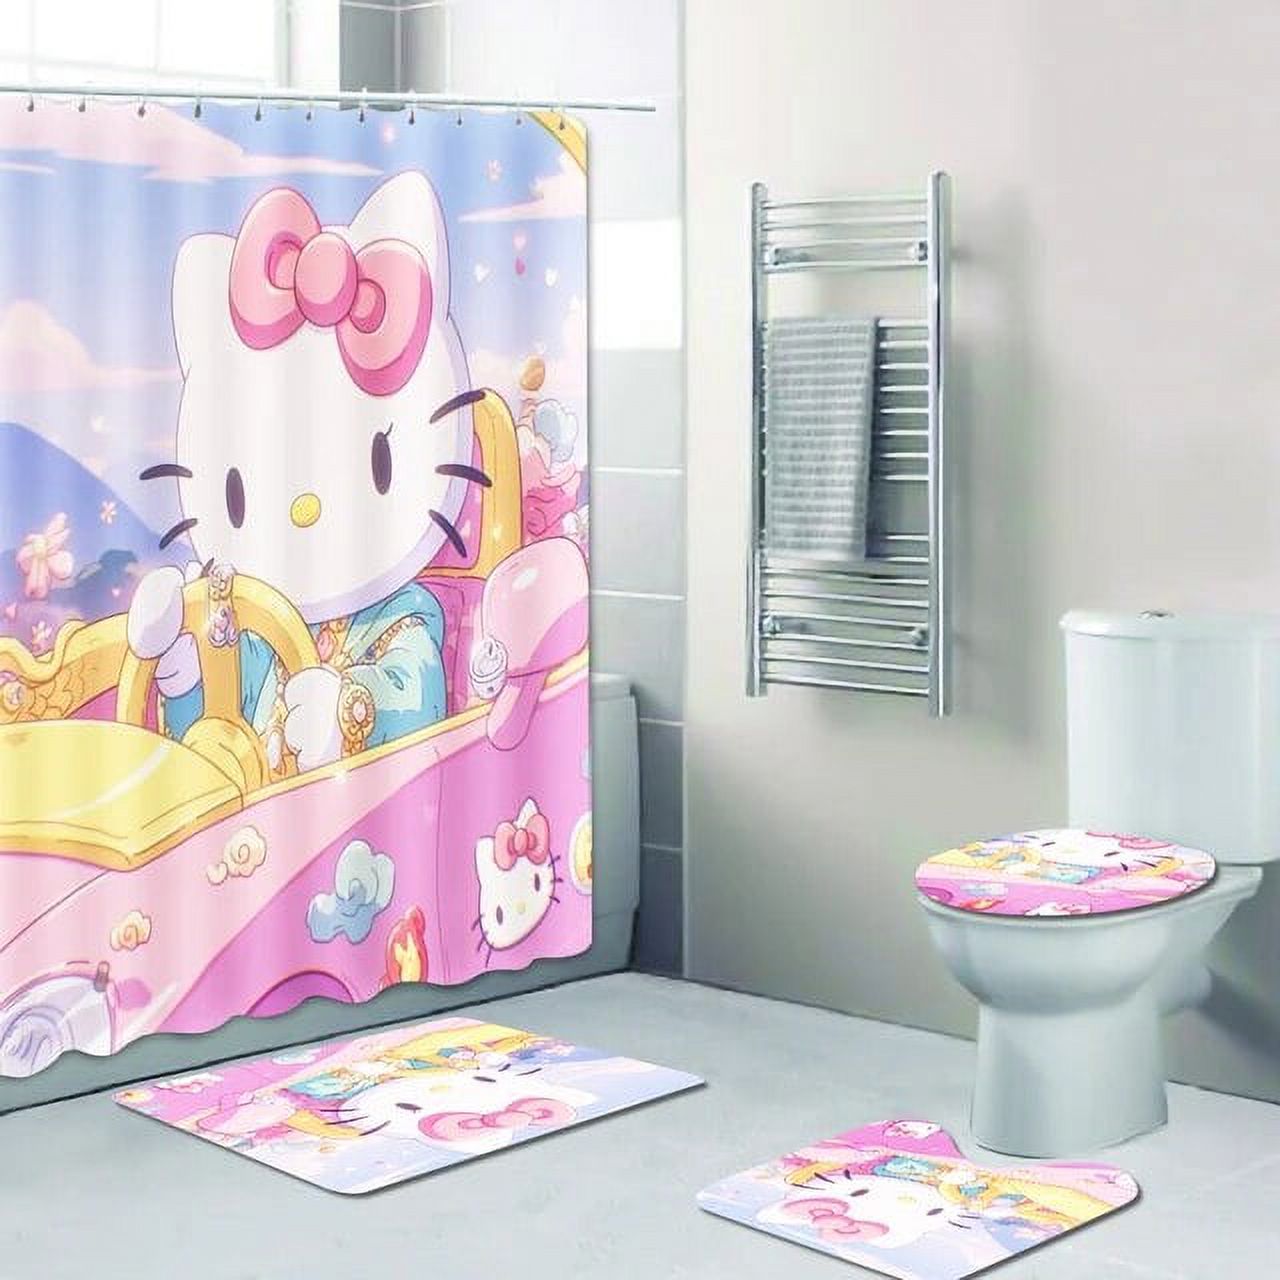 Jiayi Hello Kitty Cartoon Bathroom Mats Sanrio Curtain Bath Items Decorations And Shower Sets Full Set Accessories Anime 4 Piece - image 1 of 6